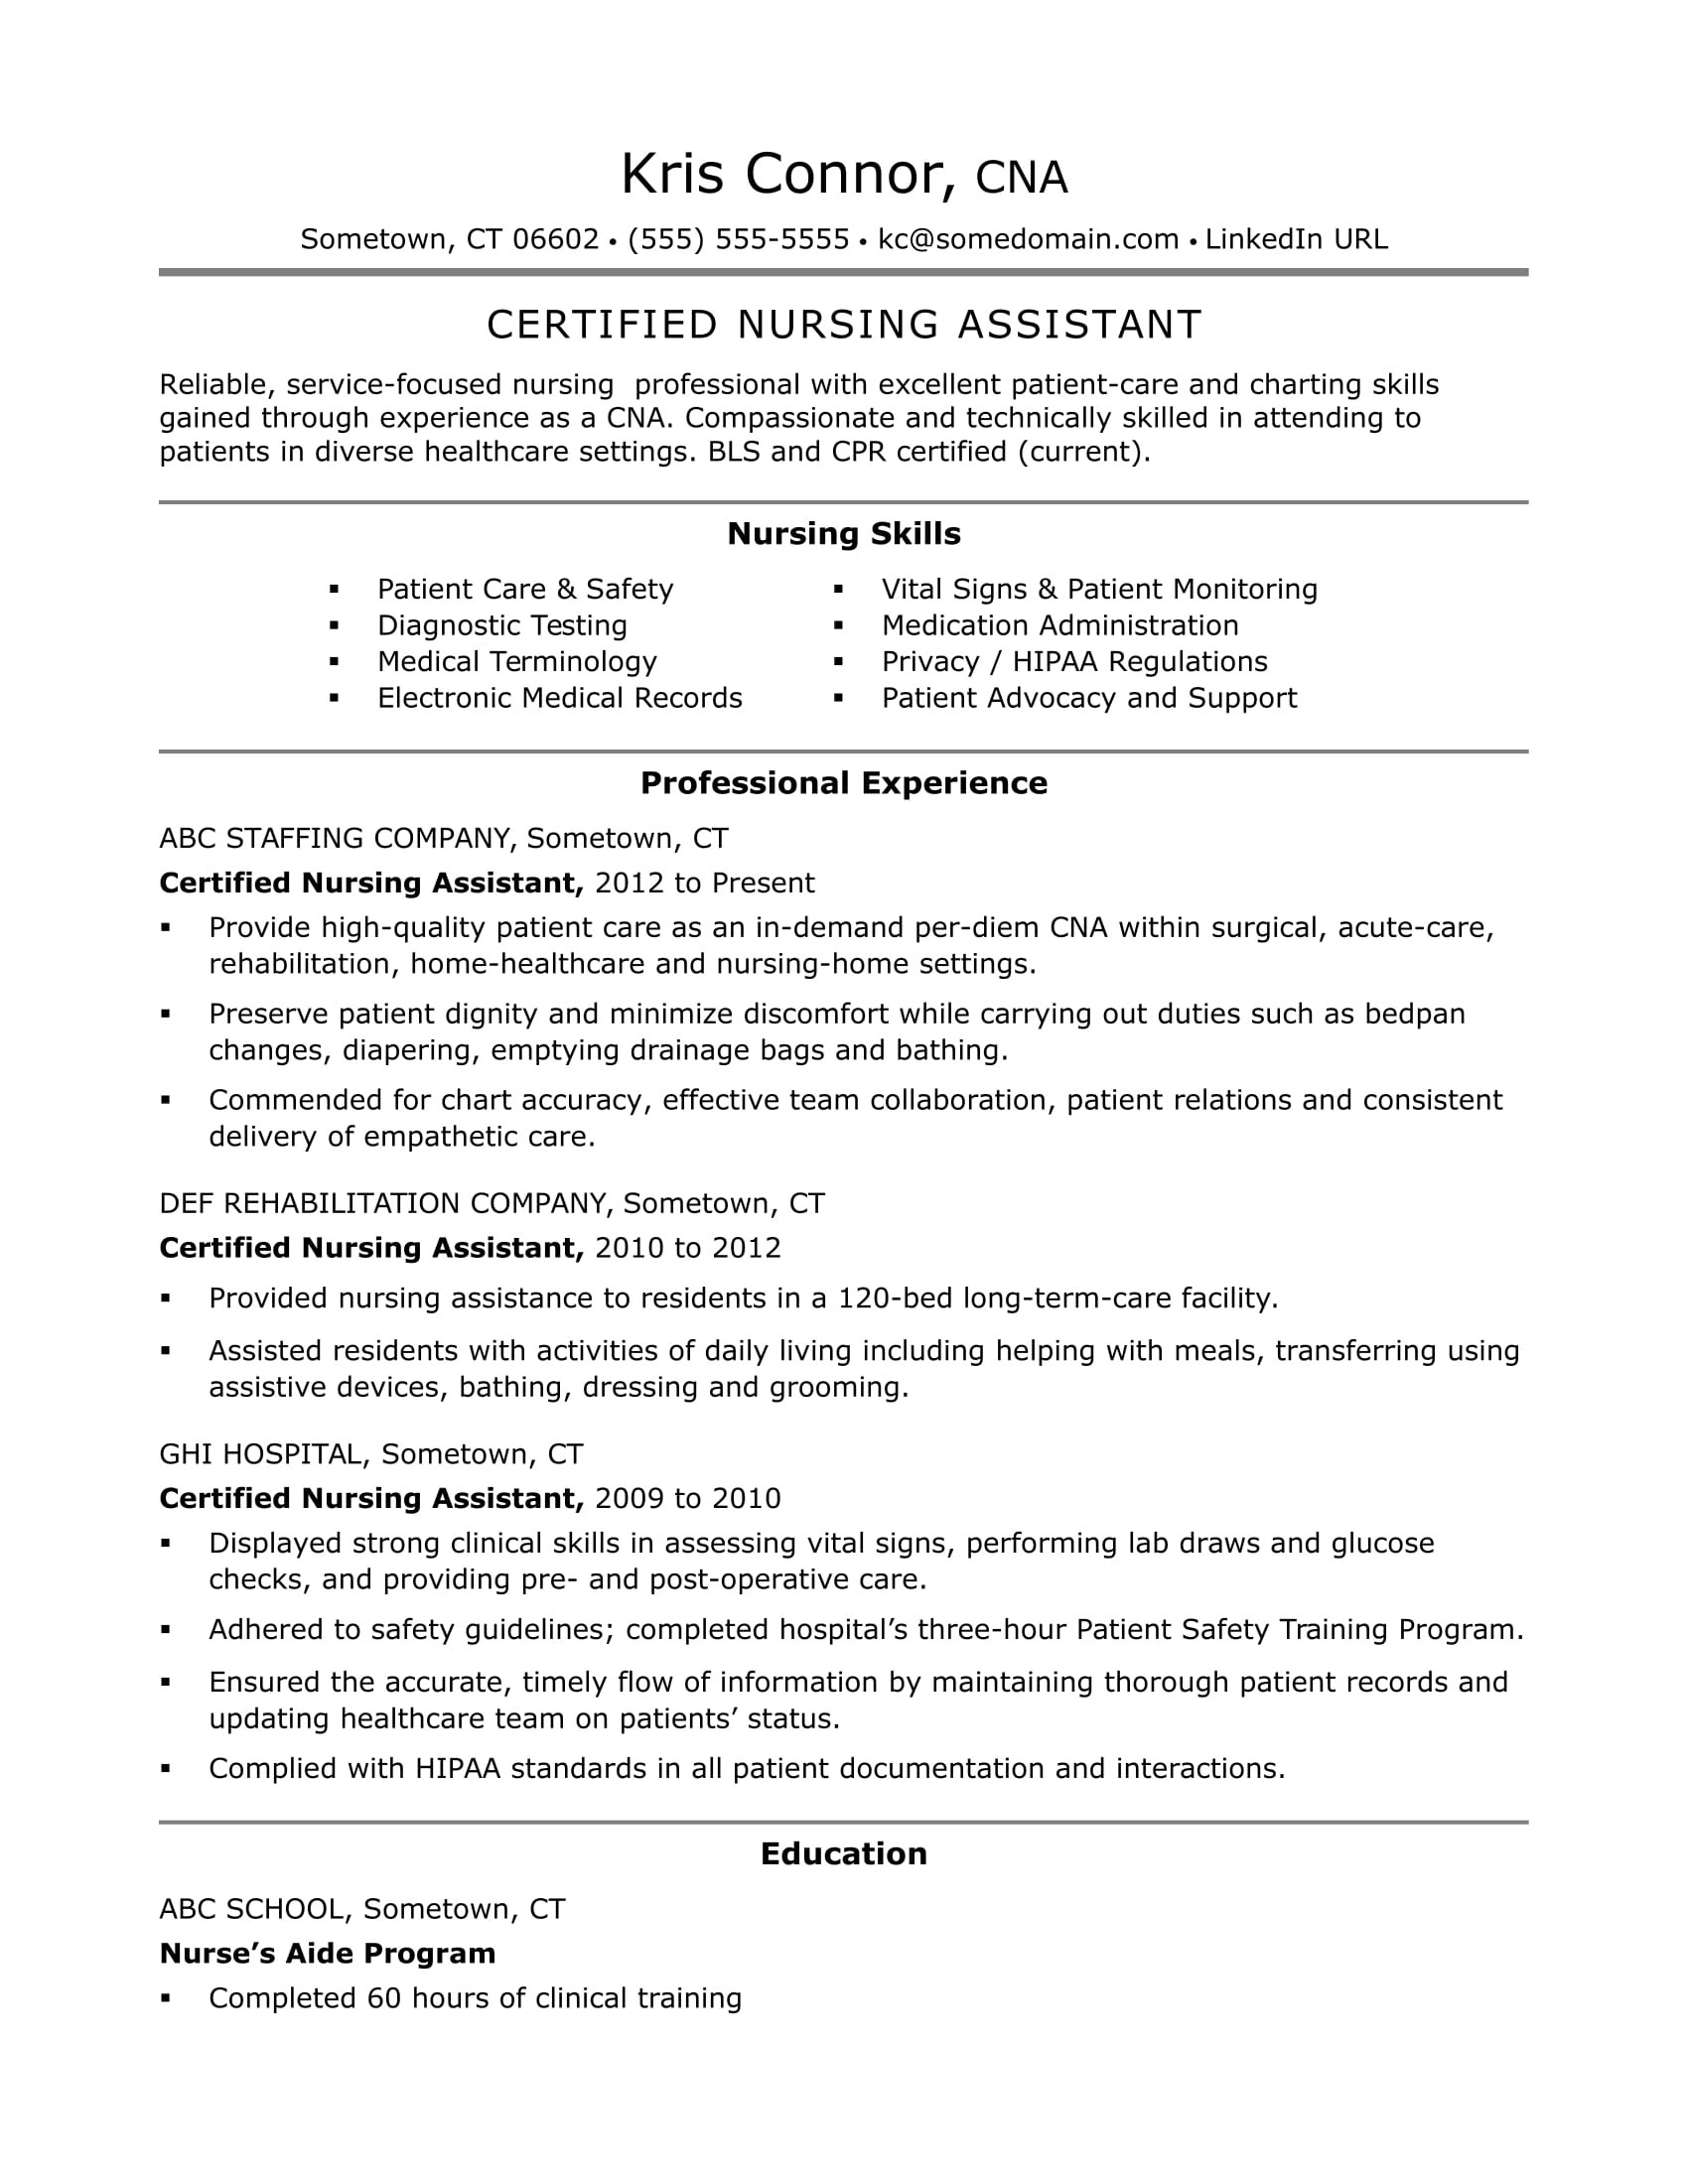 Sample Of Objectives In Resume for Nurses Cna Resume Examples: Skills for Cnas Monster.com